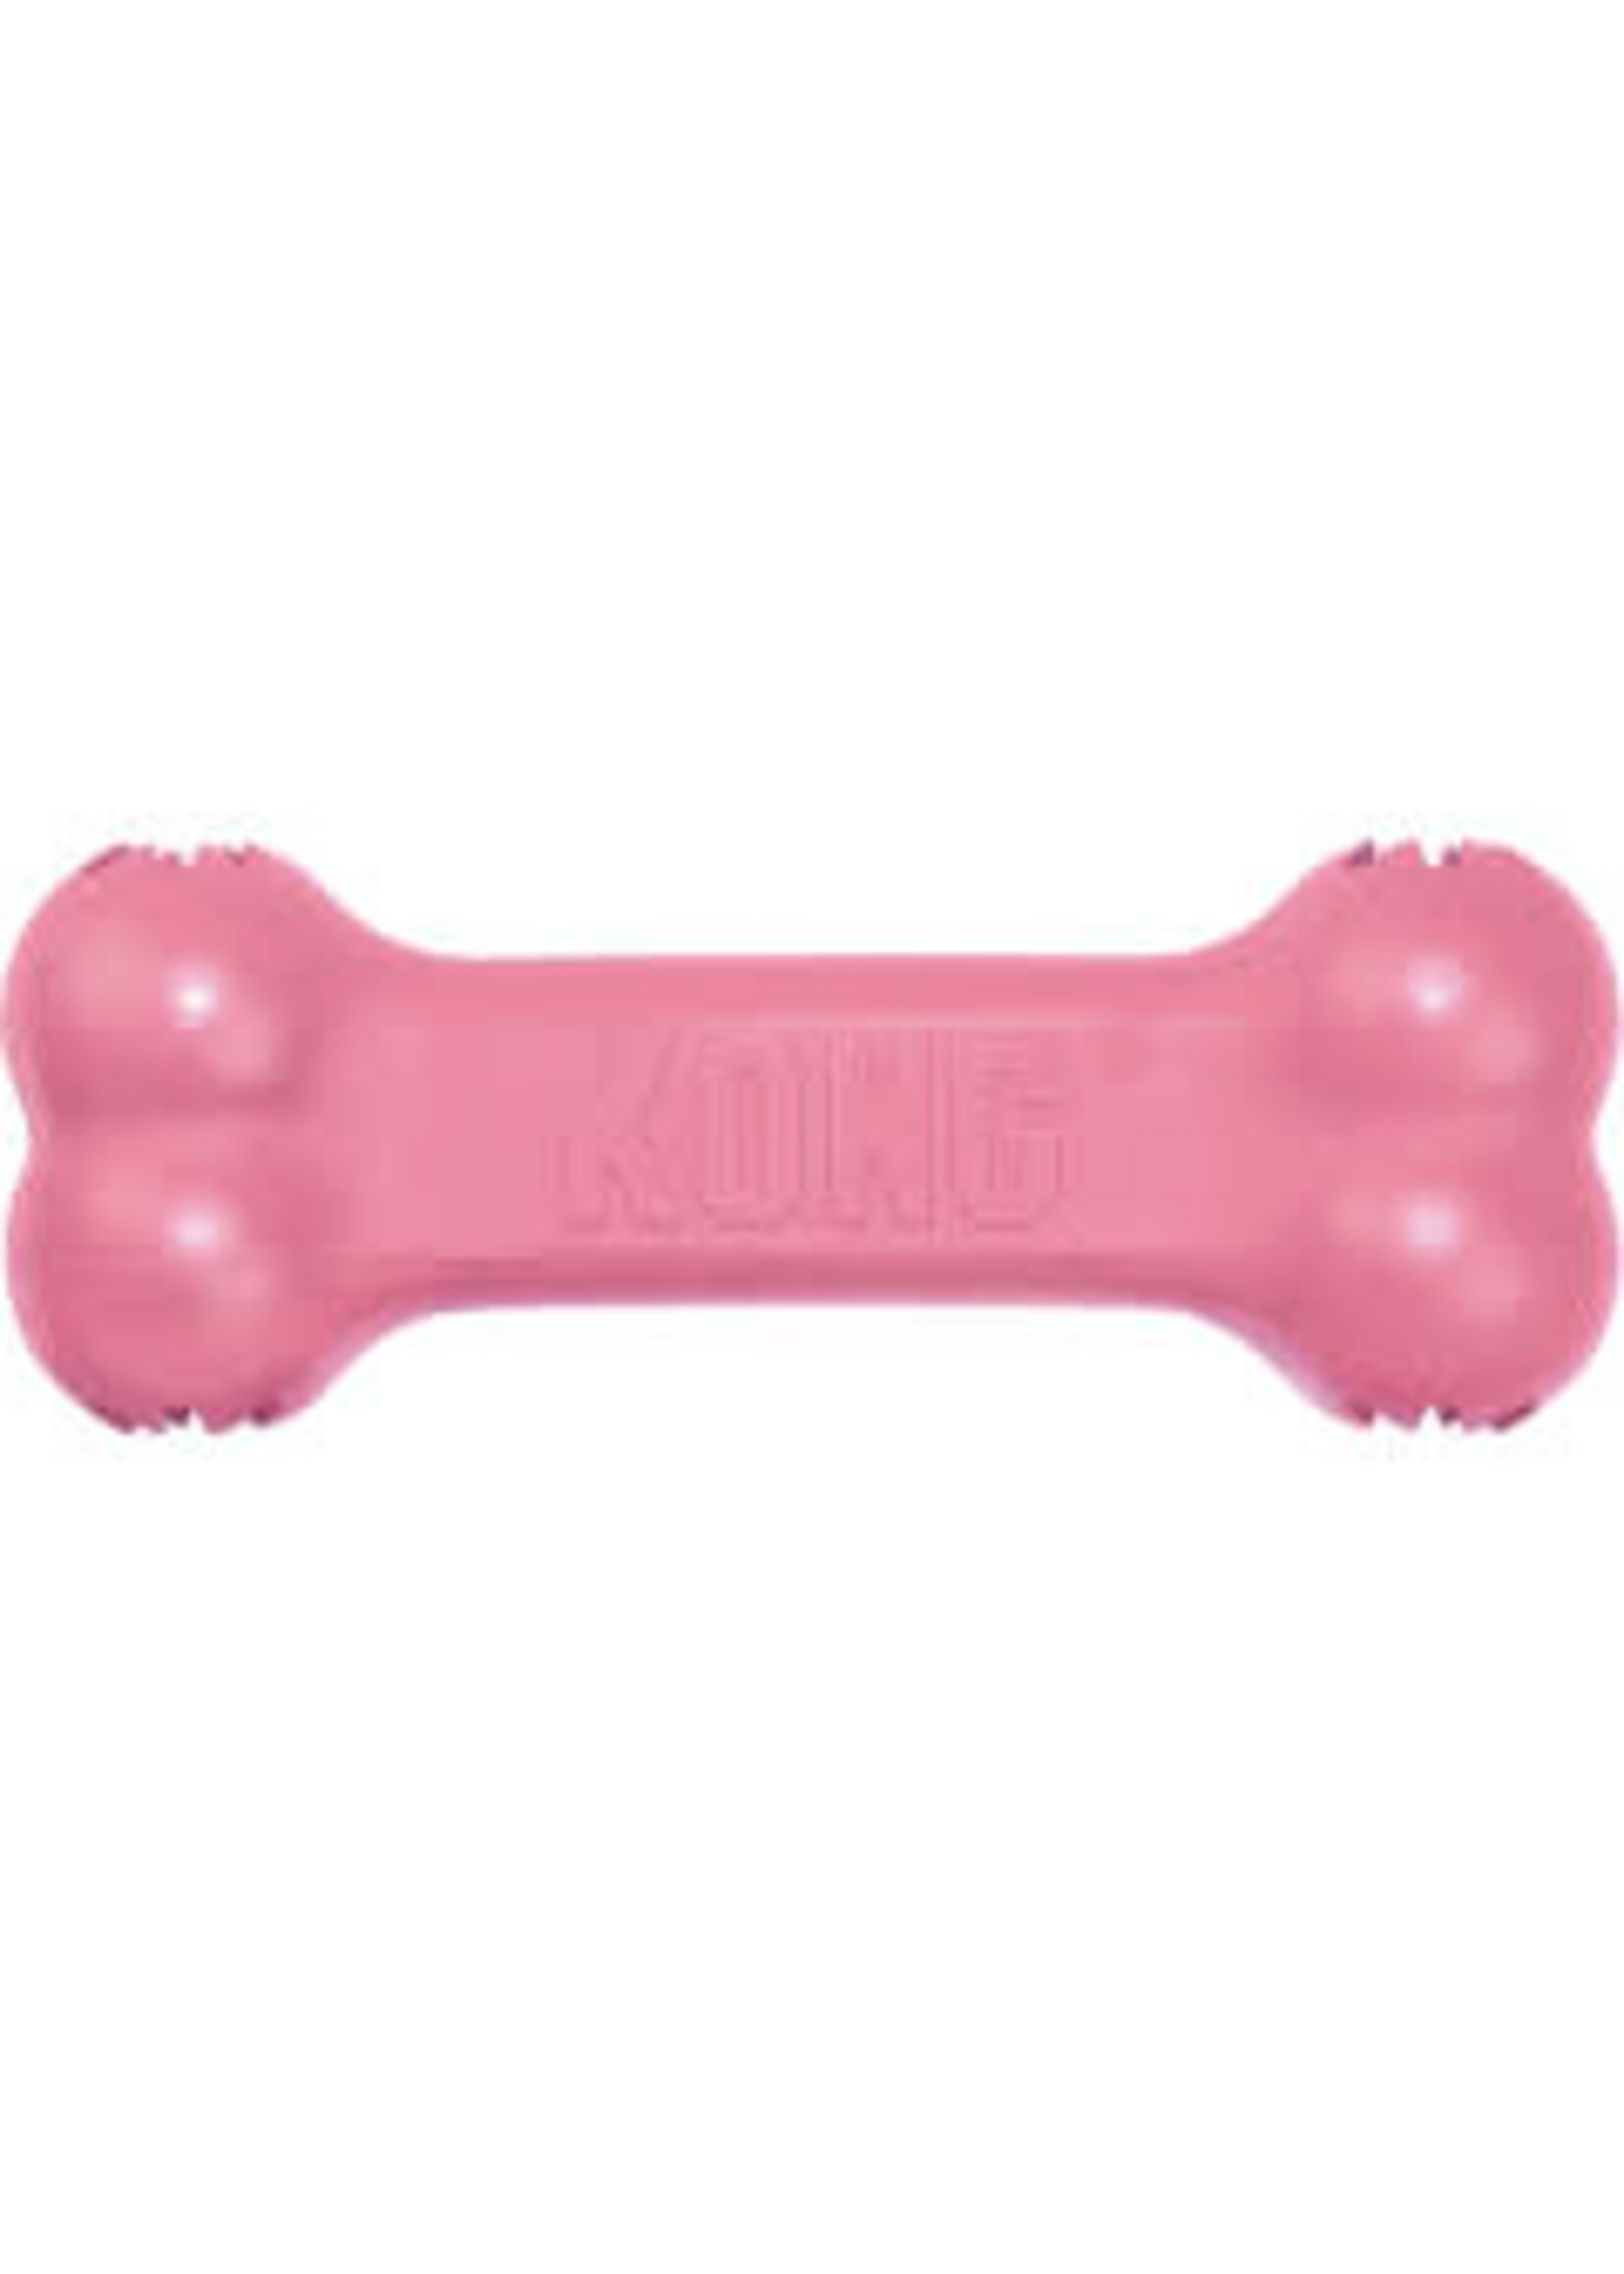 Kong Kong - Goodie Bone Small | Puppy